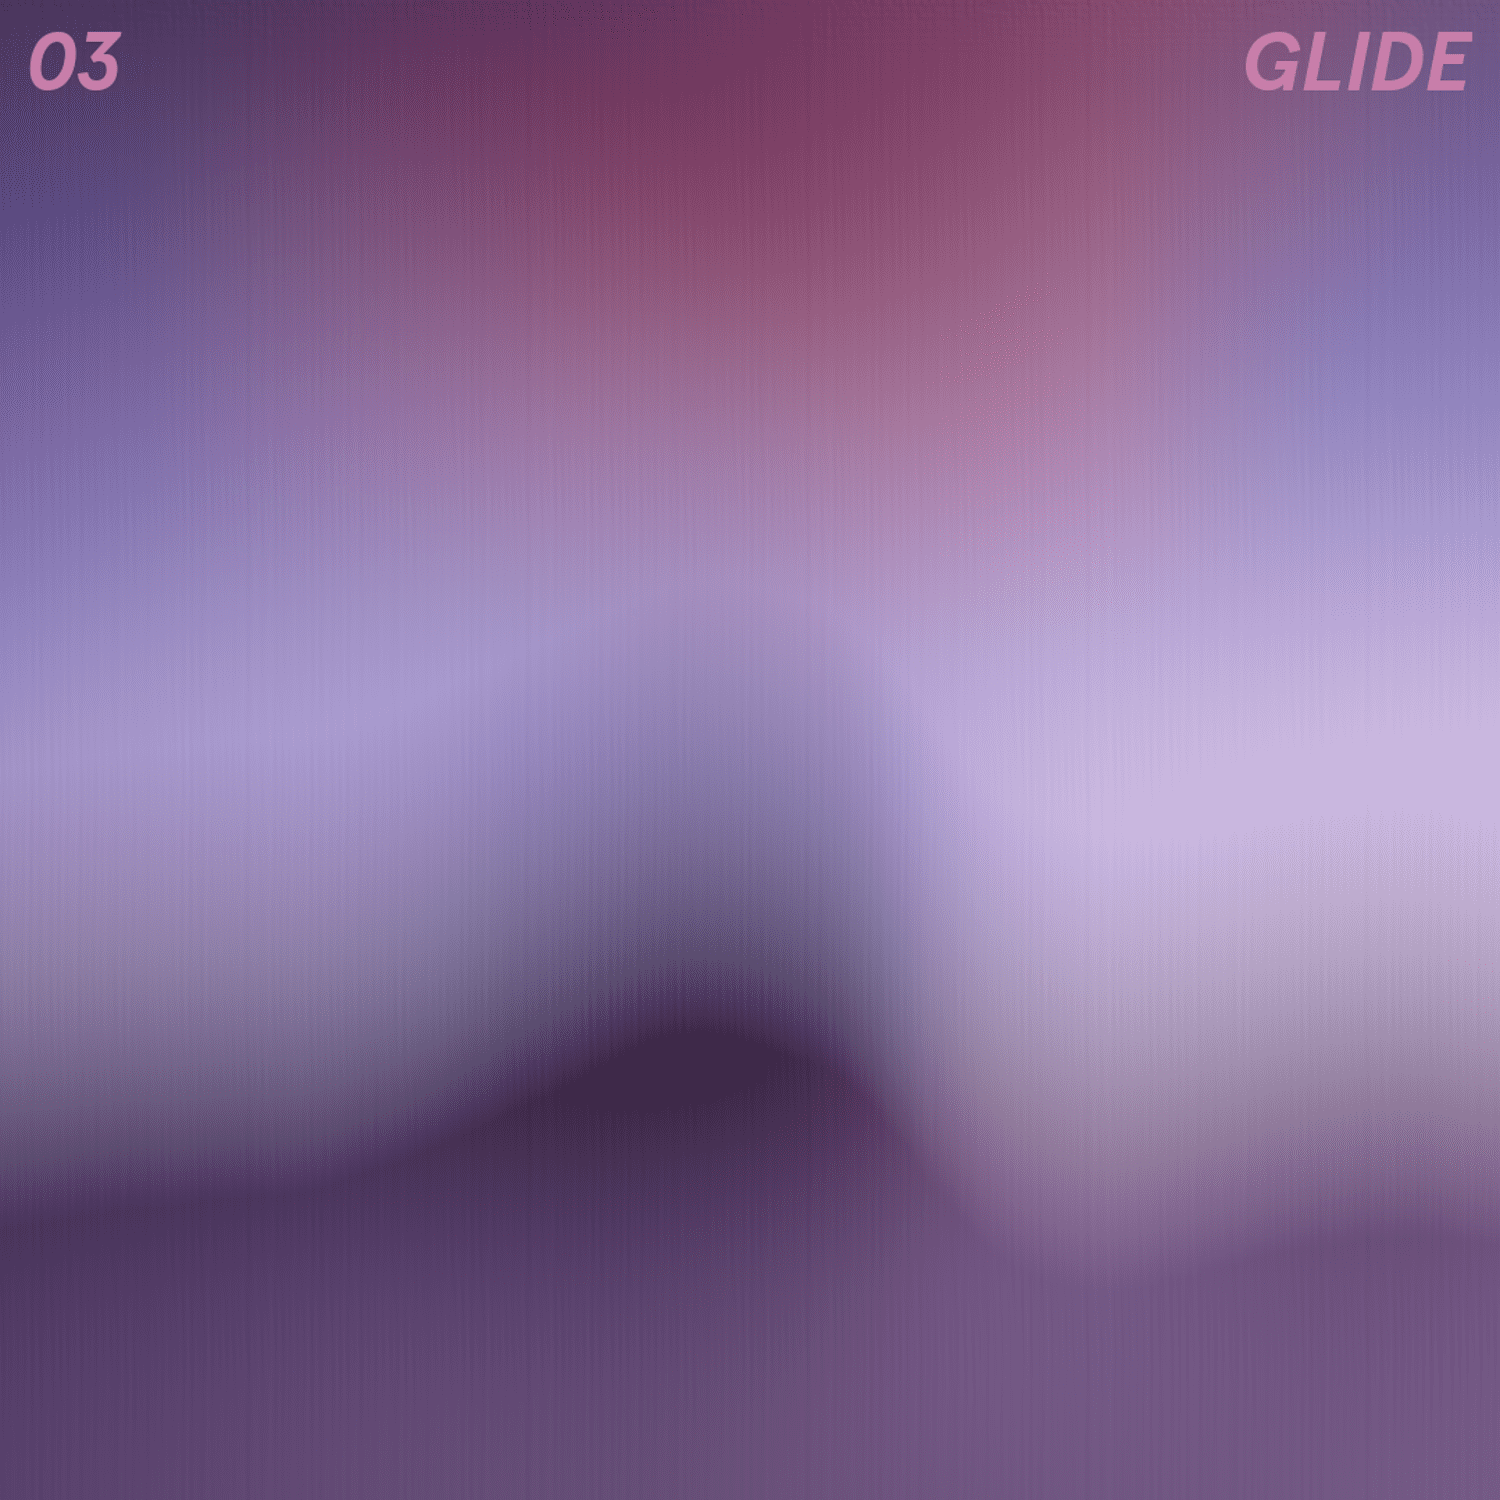 Cover art for Glide by MELVV